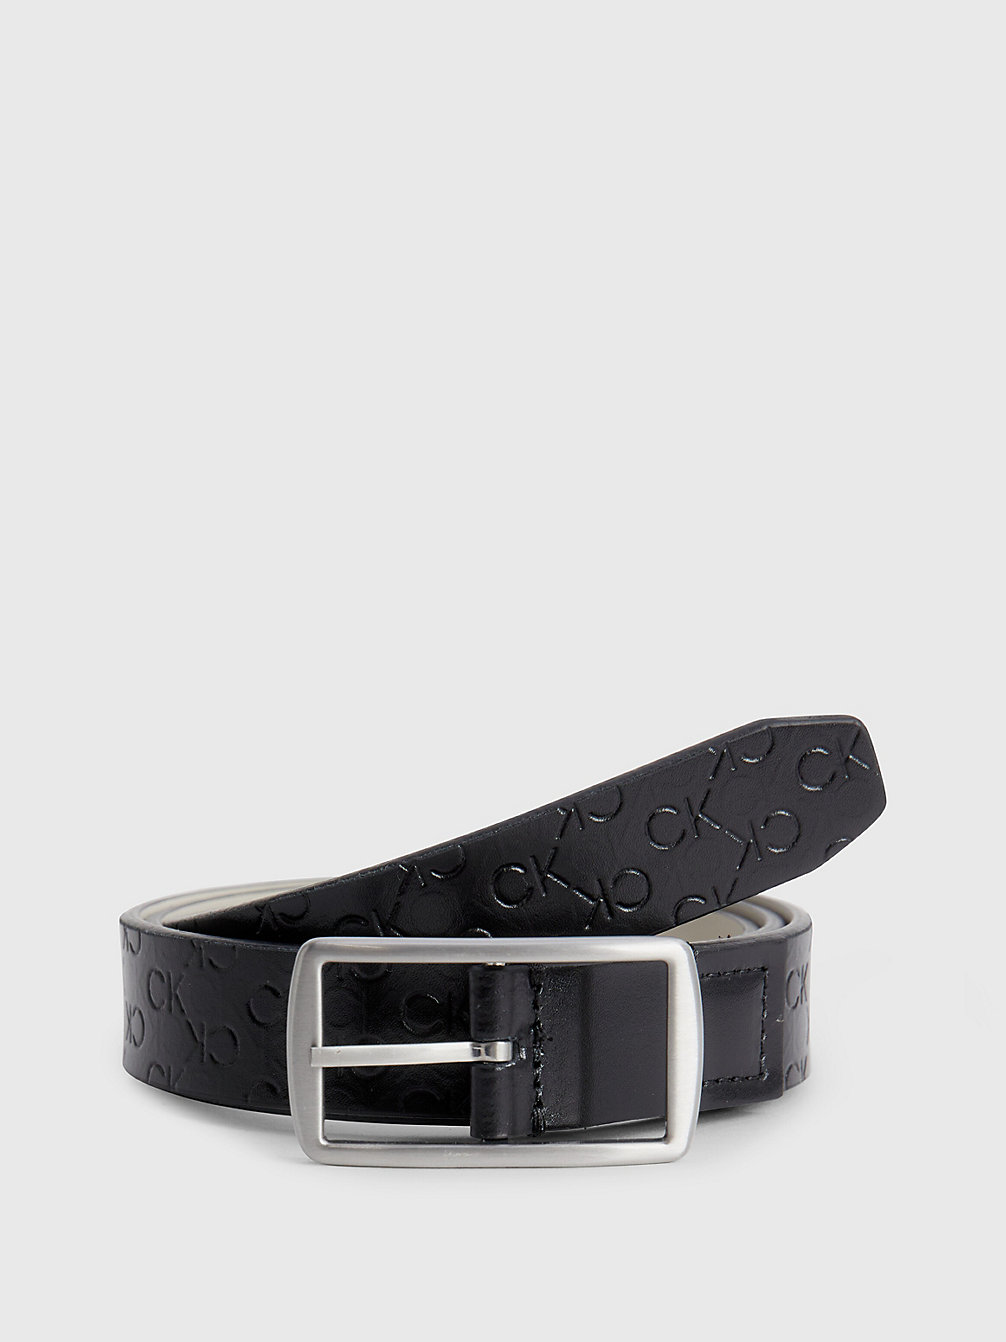 STONEY BEIGE / BLACK EMBOSS Reversible Leather Belt undefined women Calvin Klein